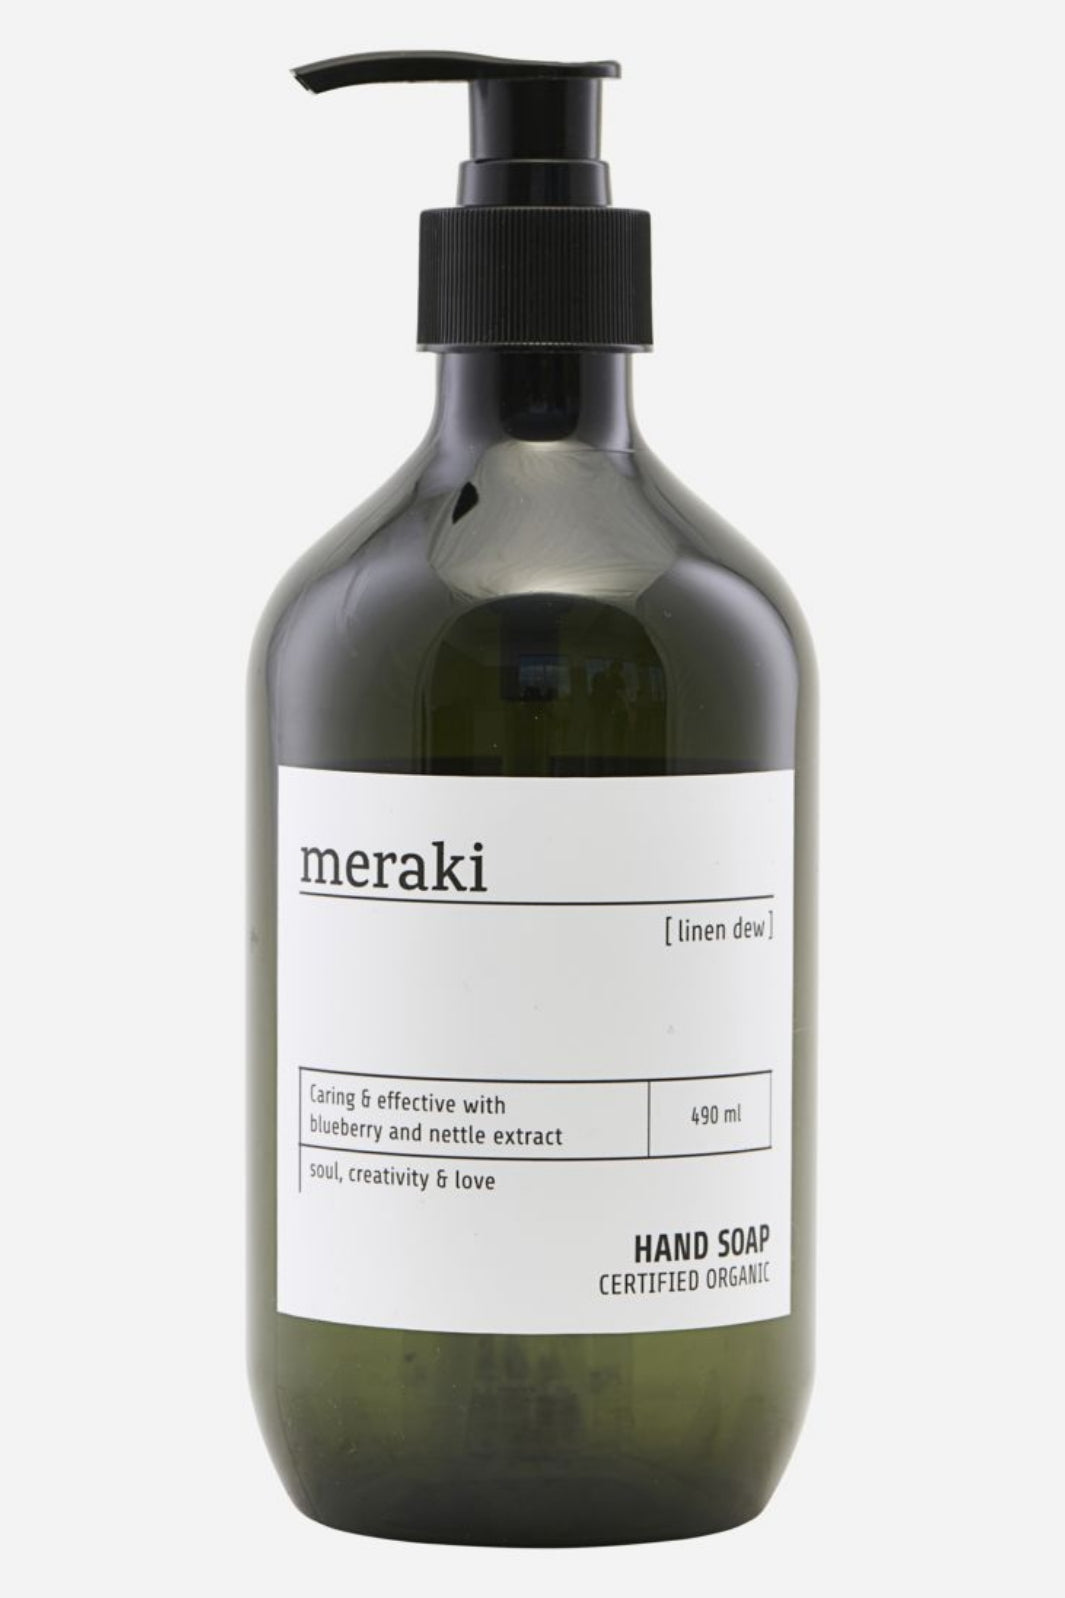 Meraki - Håndsæbe Linen dew - 490 ml Håndsæbe 